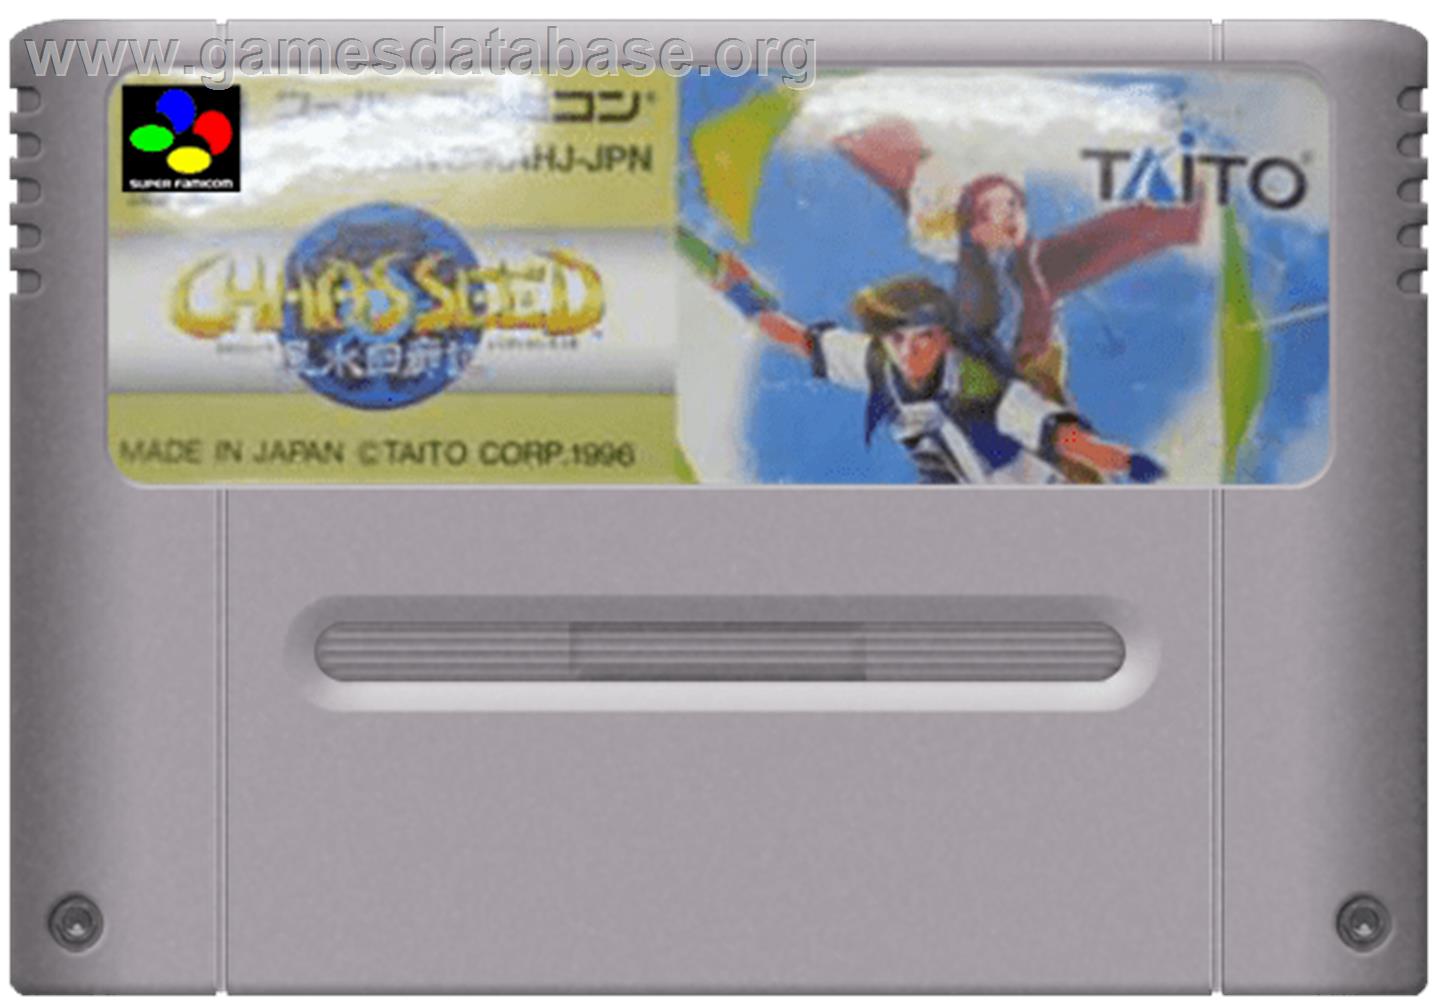 Chaos Seed: Fuusui Kairoki - Nintendo SNES - Artwork - Cartridge